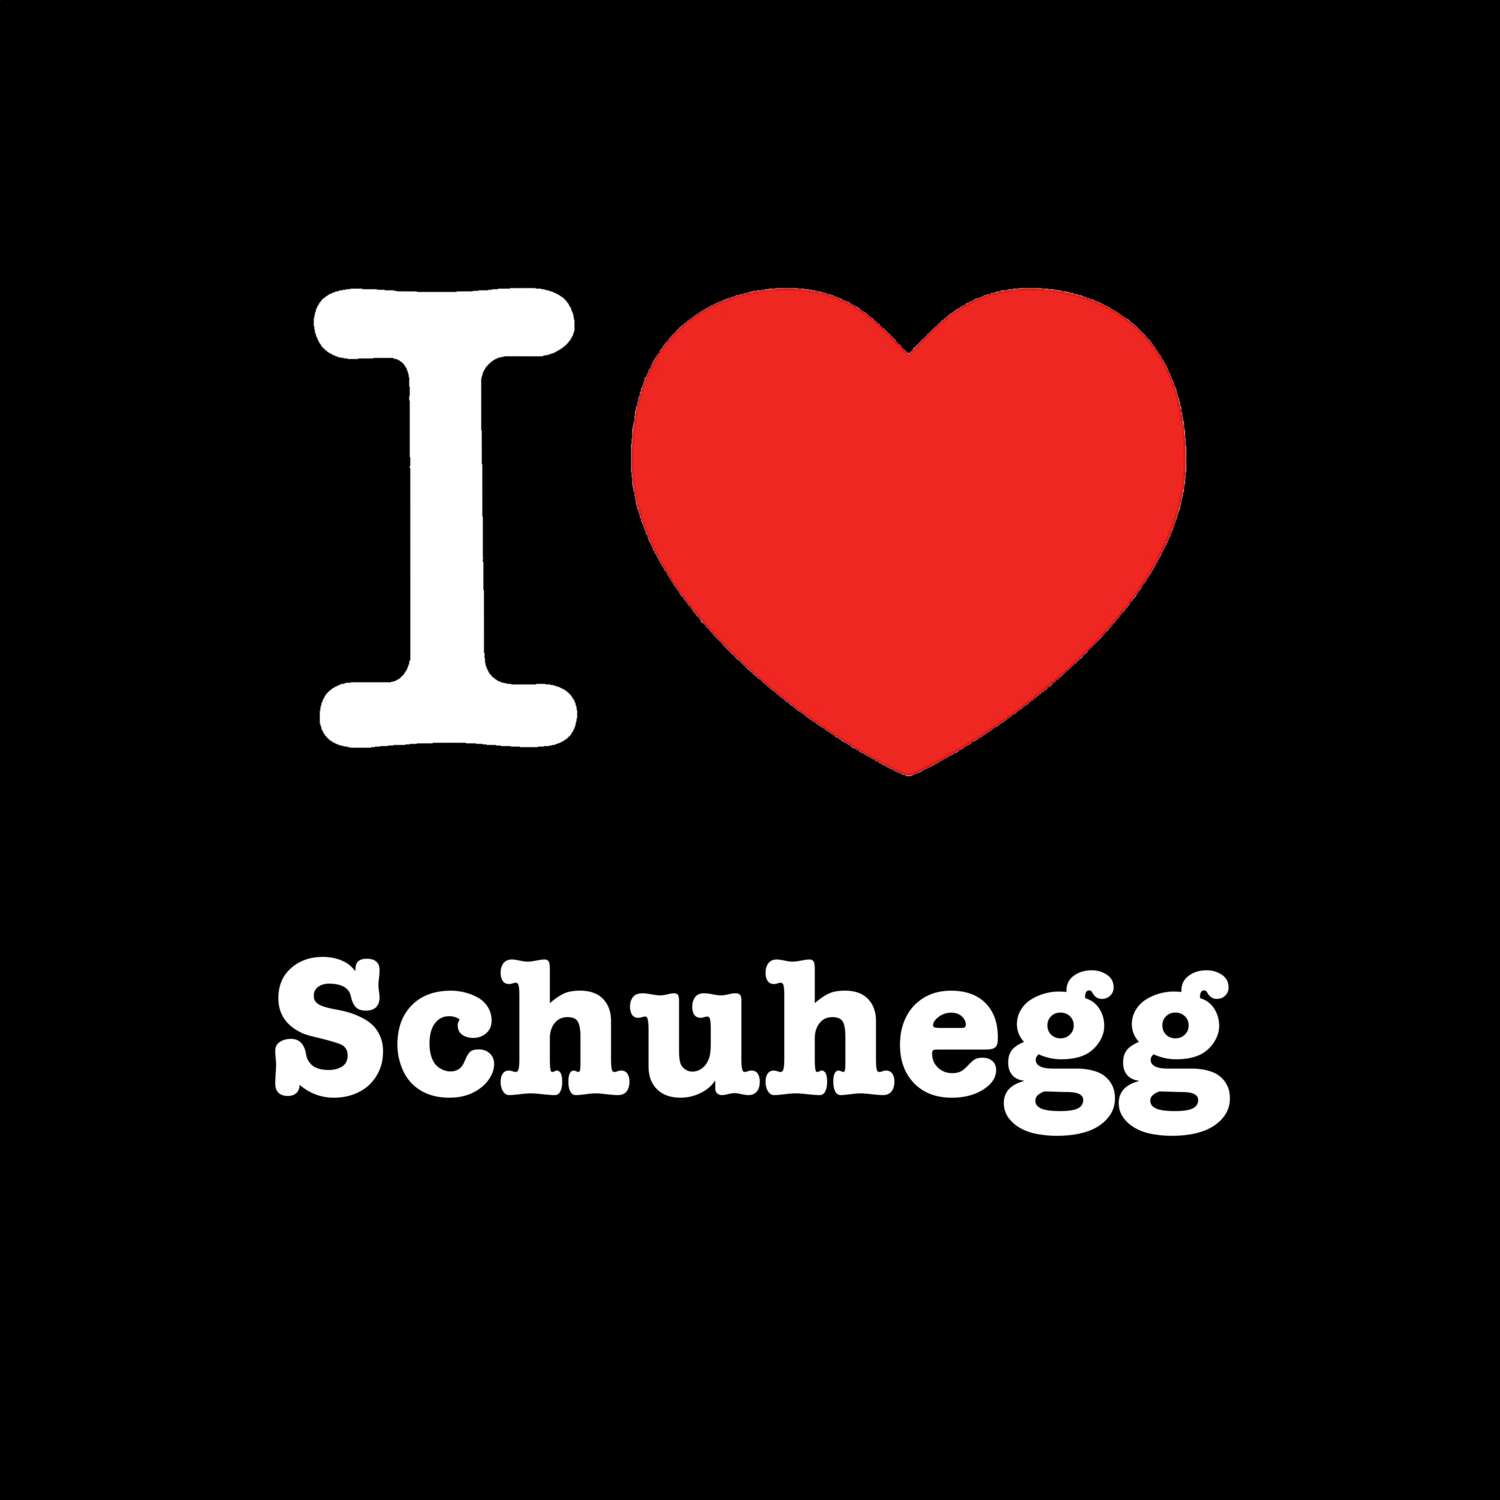 Schuhegg T-Shirt »I love«